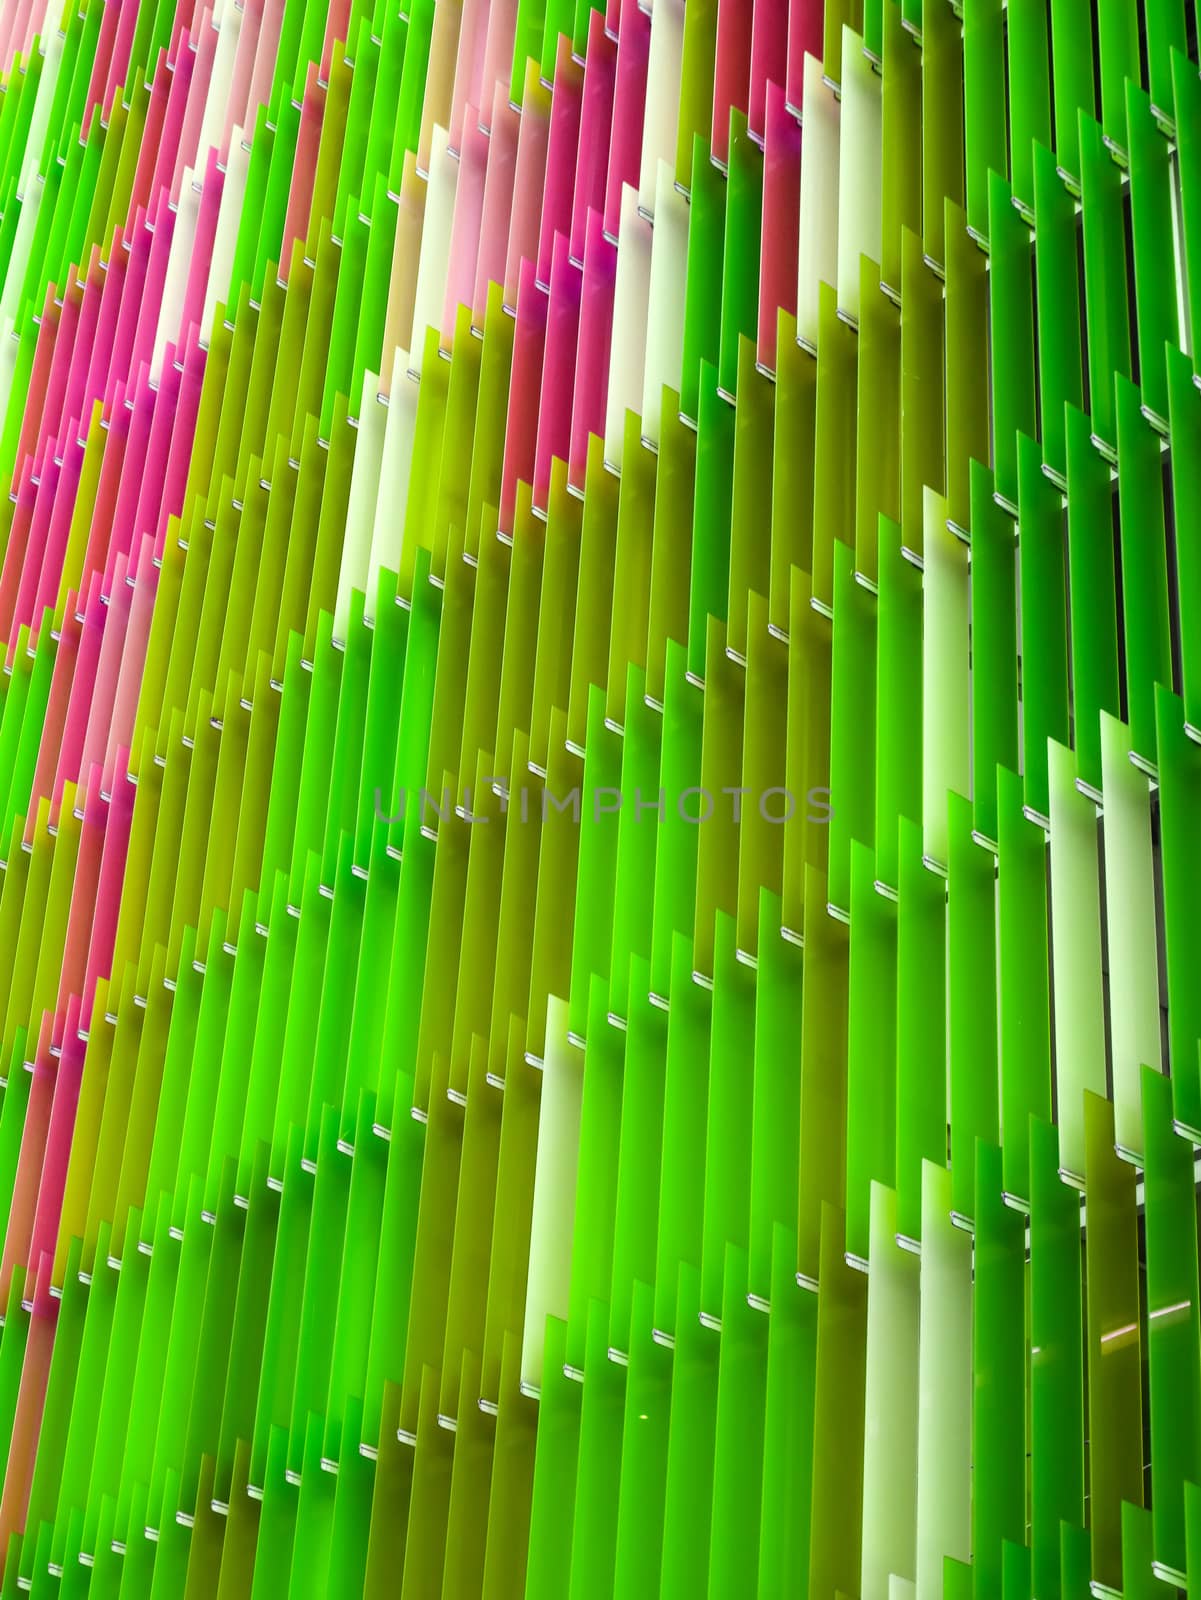 acrylic plastic sheet interior vertical, color moss green apple by Darkfox